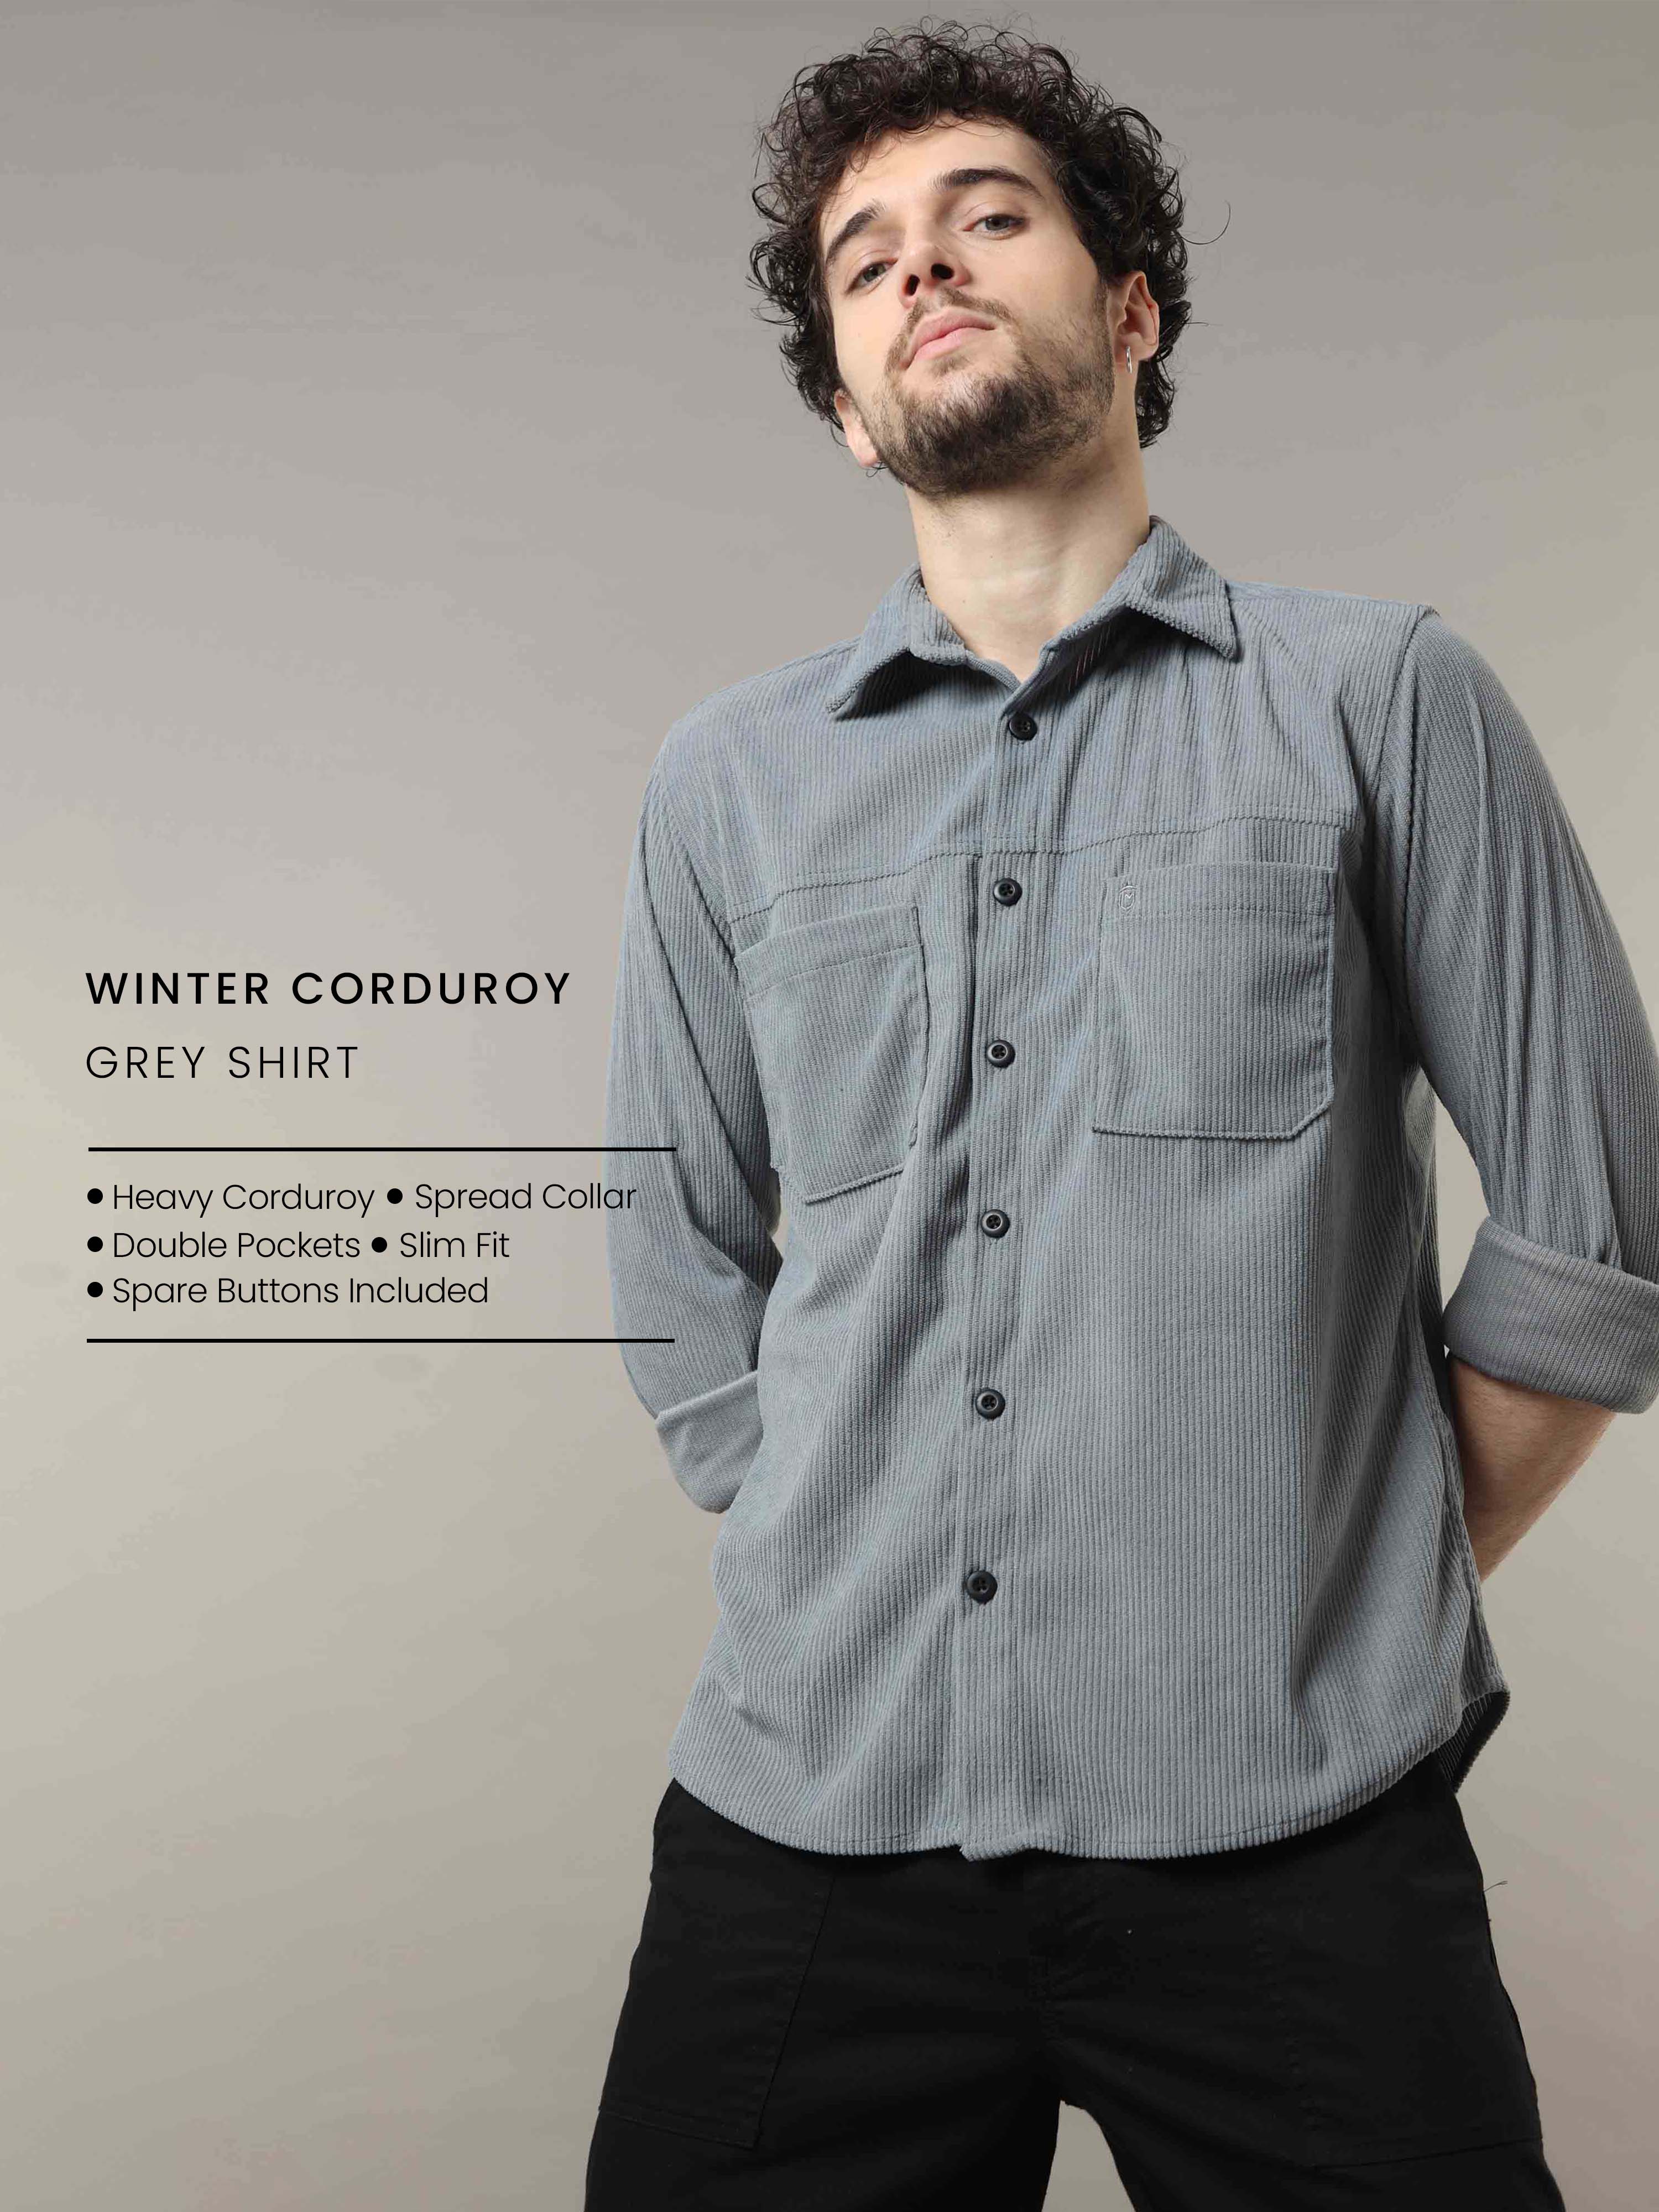 Shop Trendy Double Pocket Grey Shacket Shirt for MenRs. 1499.00